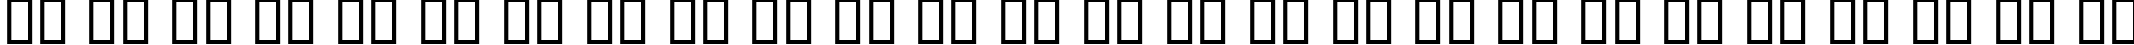 Пример написания английского алфавита шрифтом B Homa